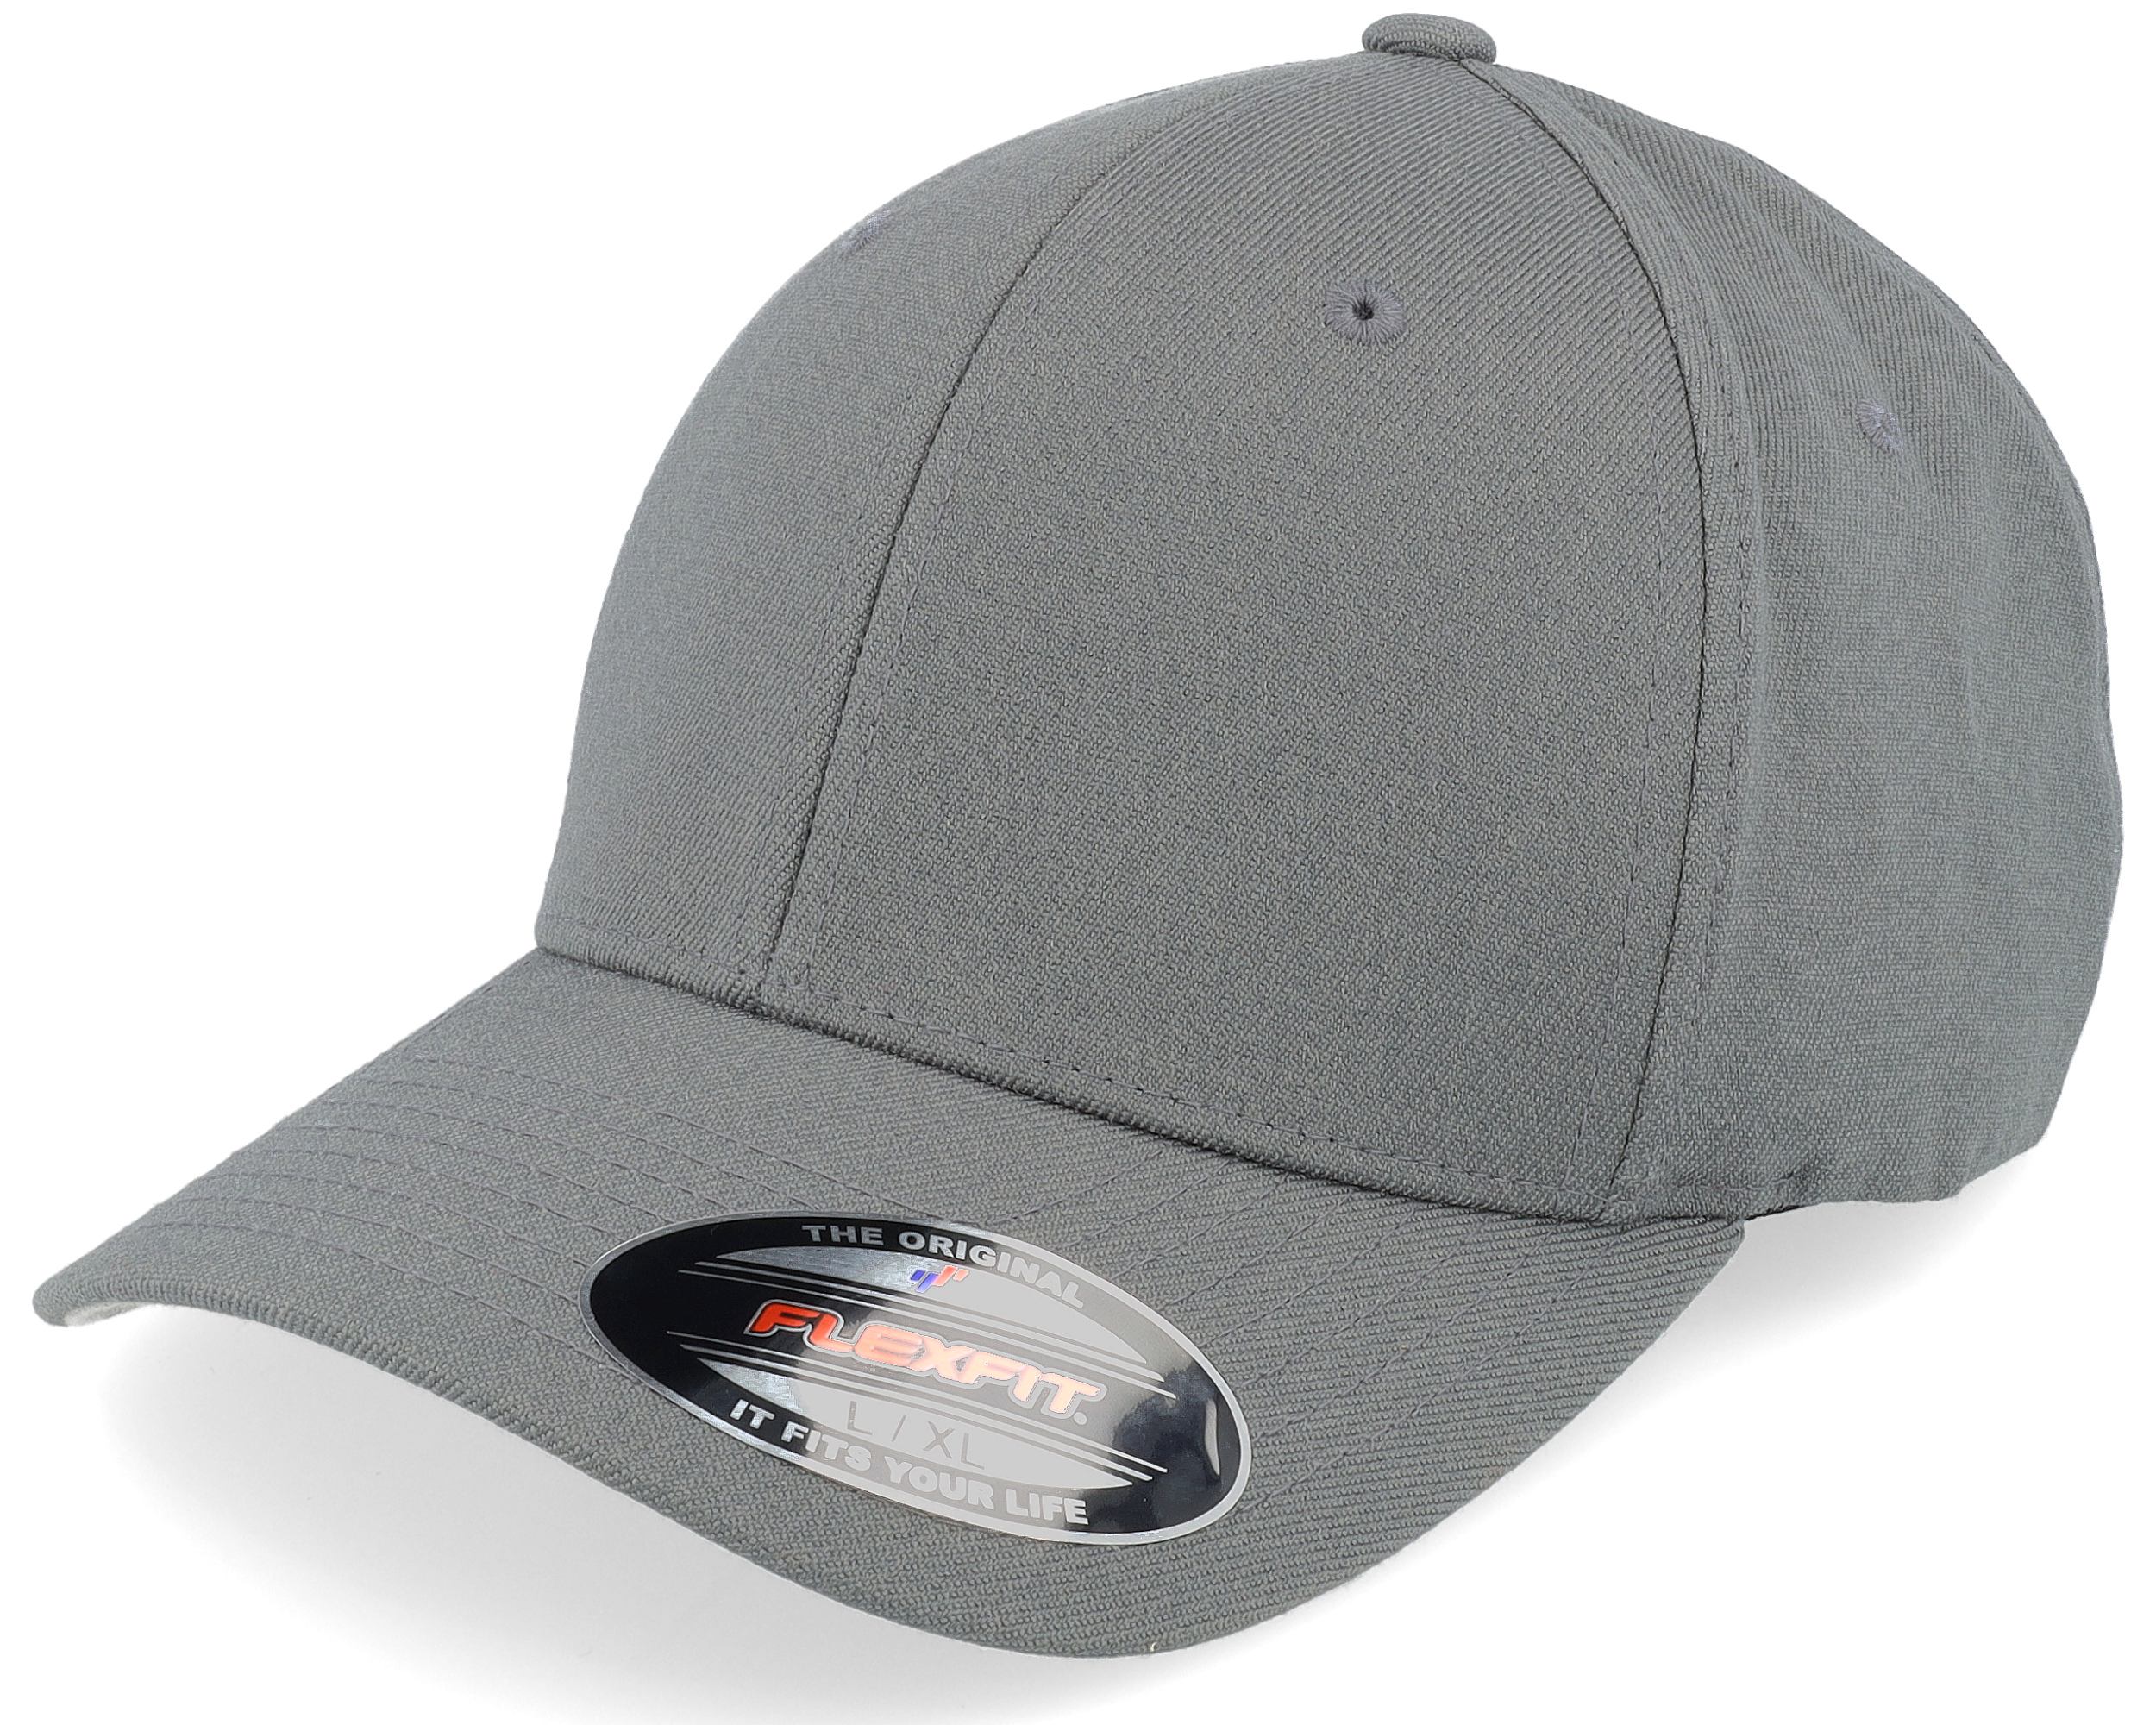 Wool Blend Grey Flexfit - Flexfit cap